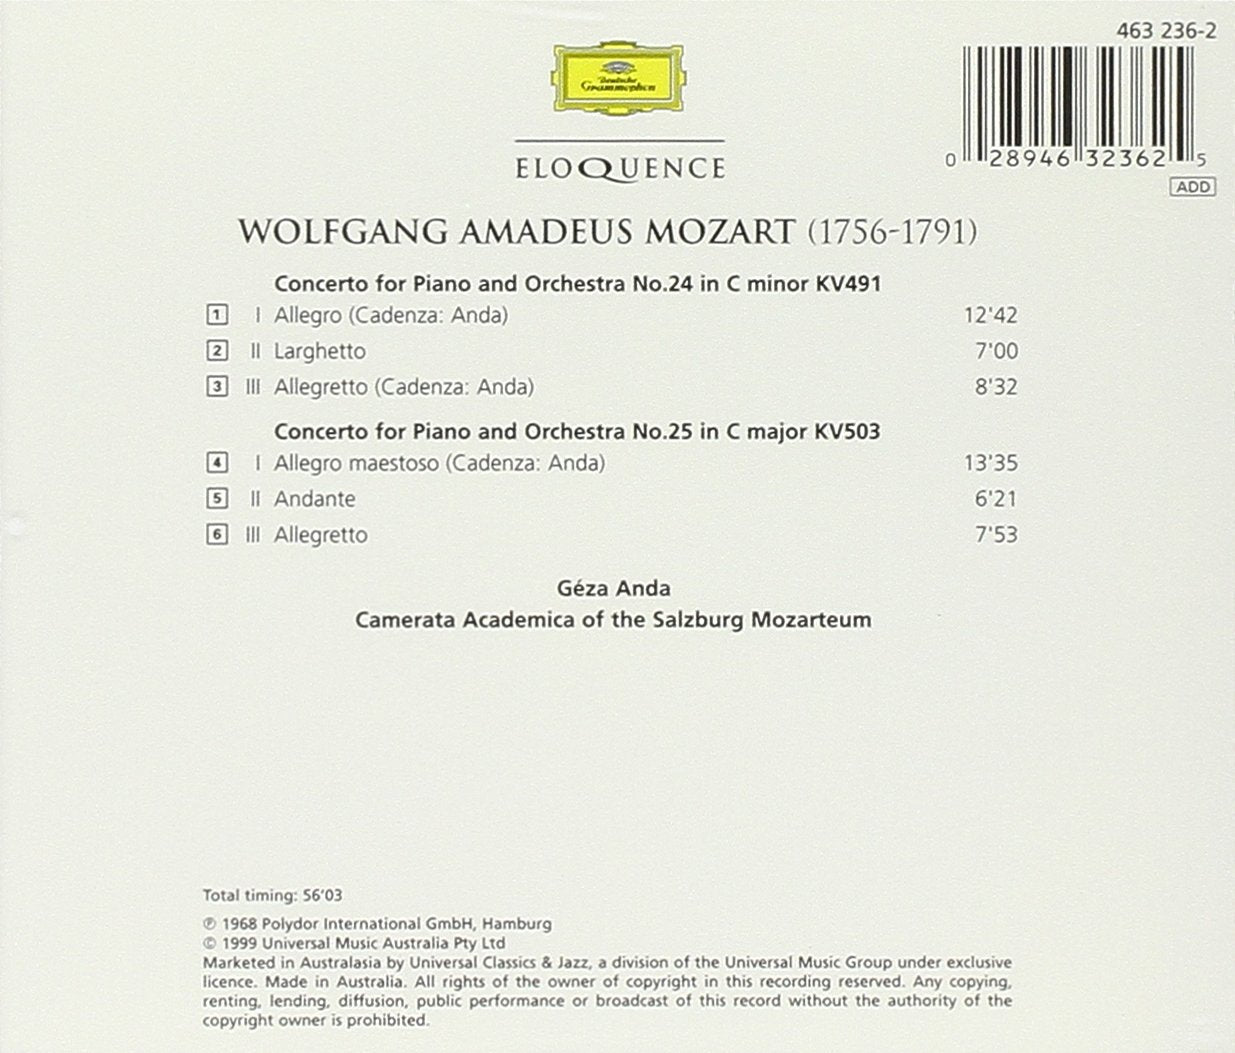 MOZART: Piano Concertos 24 & 25 - Geza Anda, Camerata Accademica of the Salzburg Mozarteum